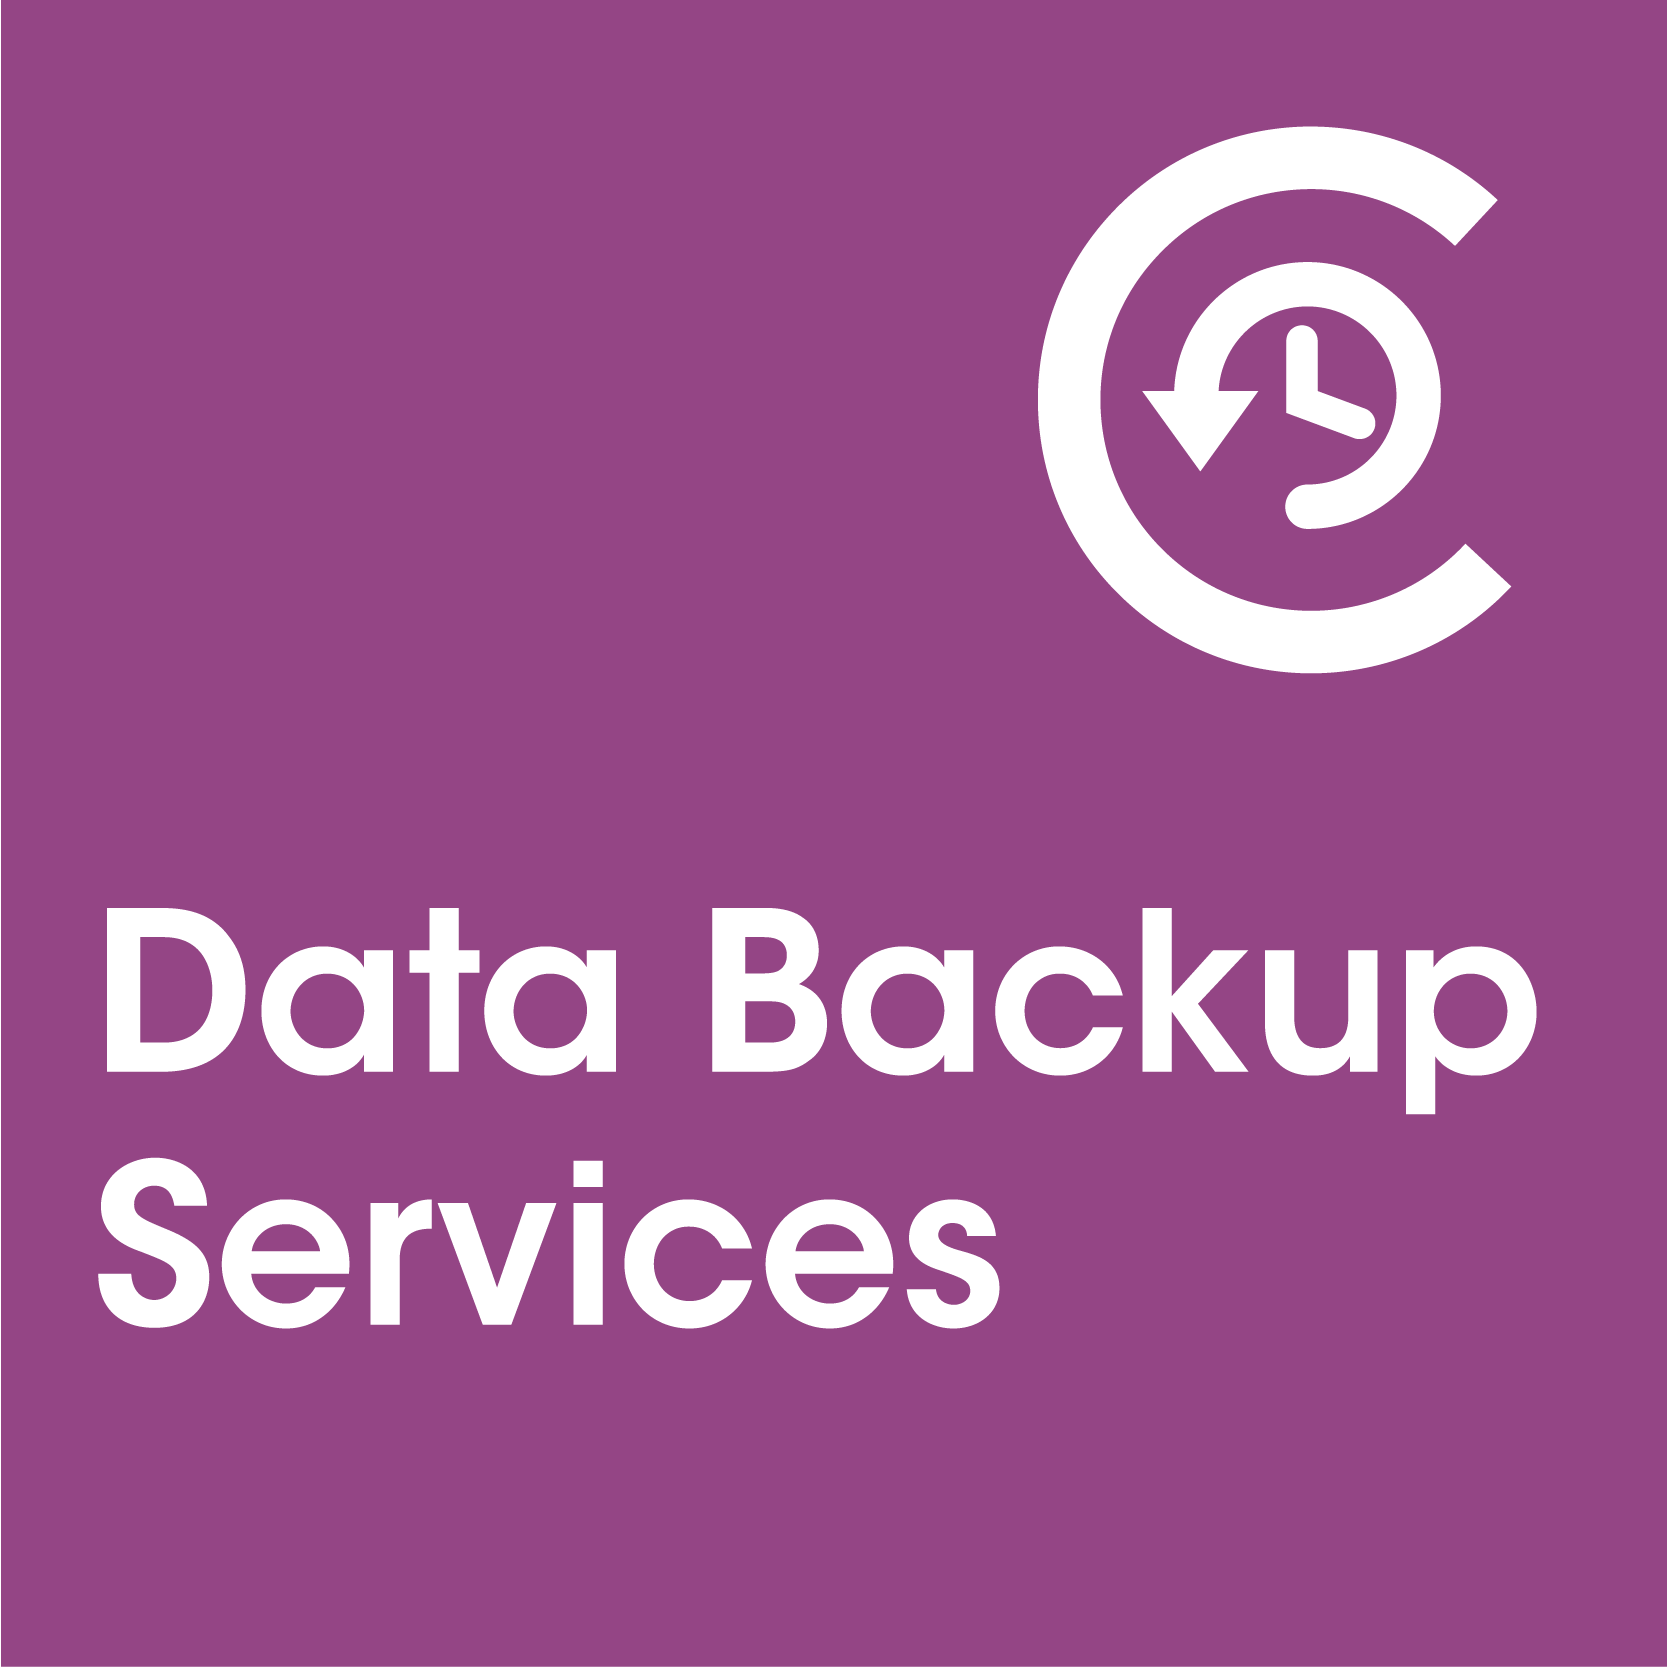 Data Backup Services block